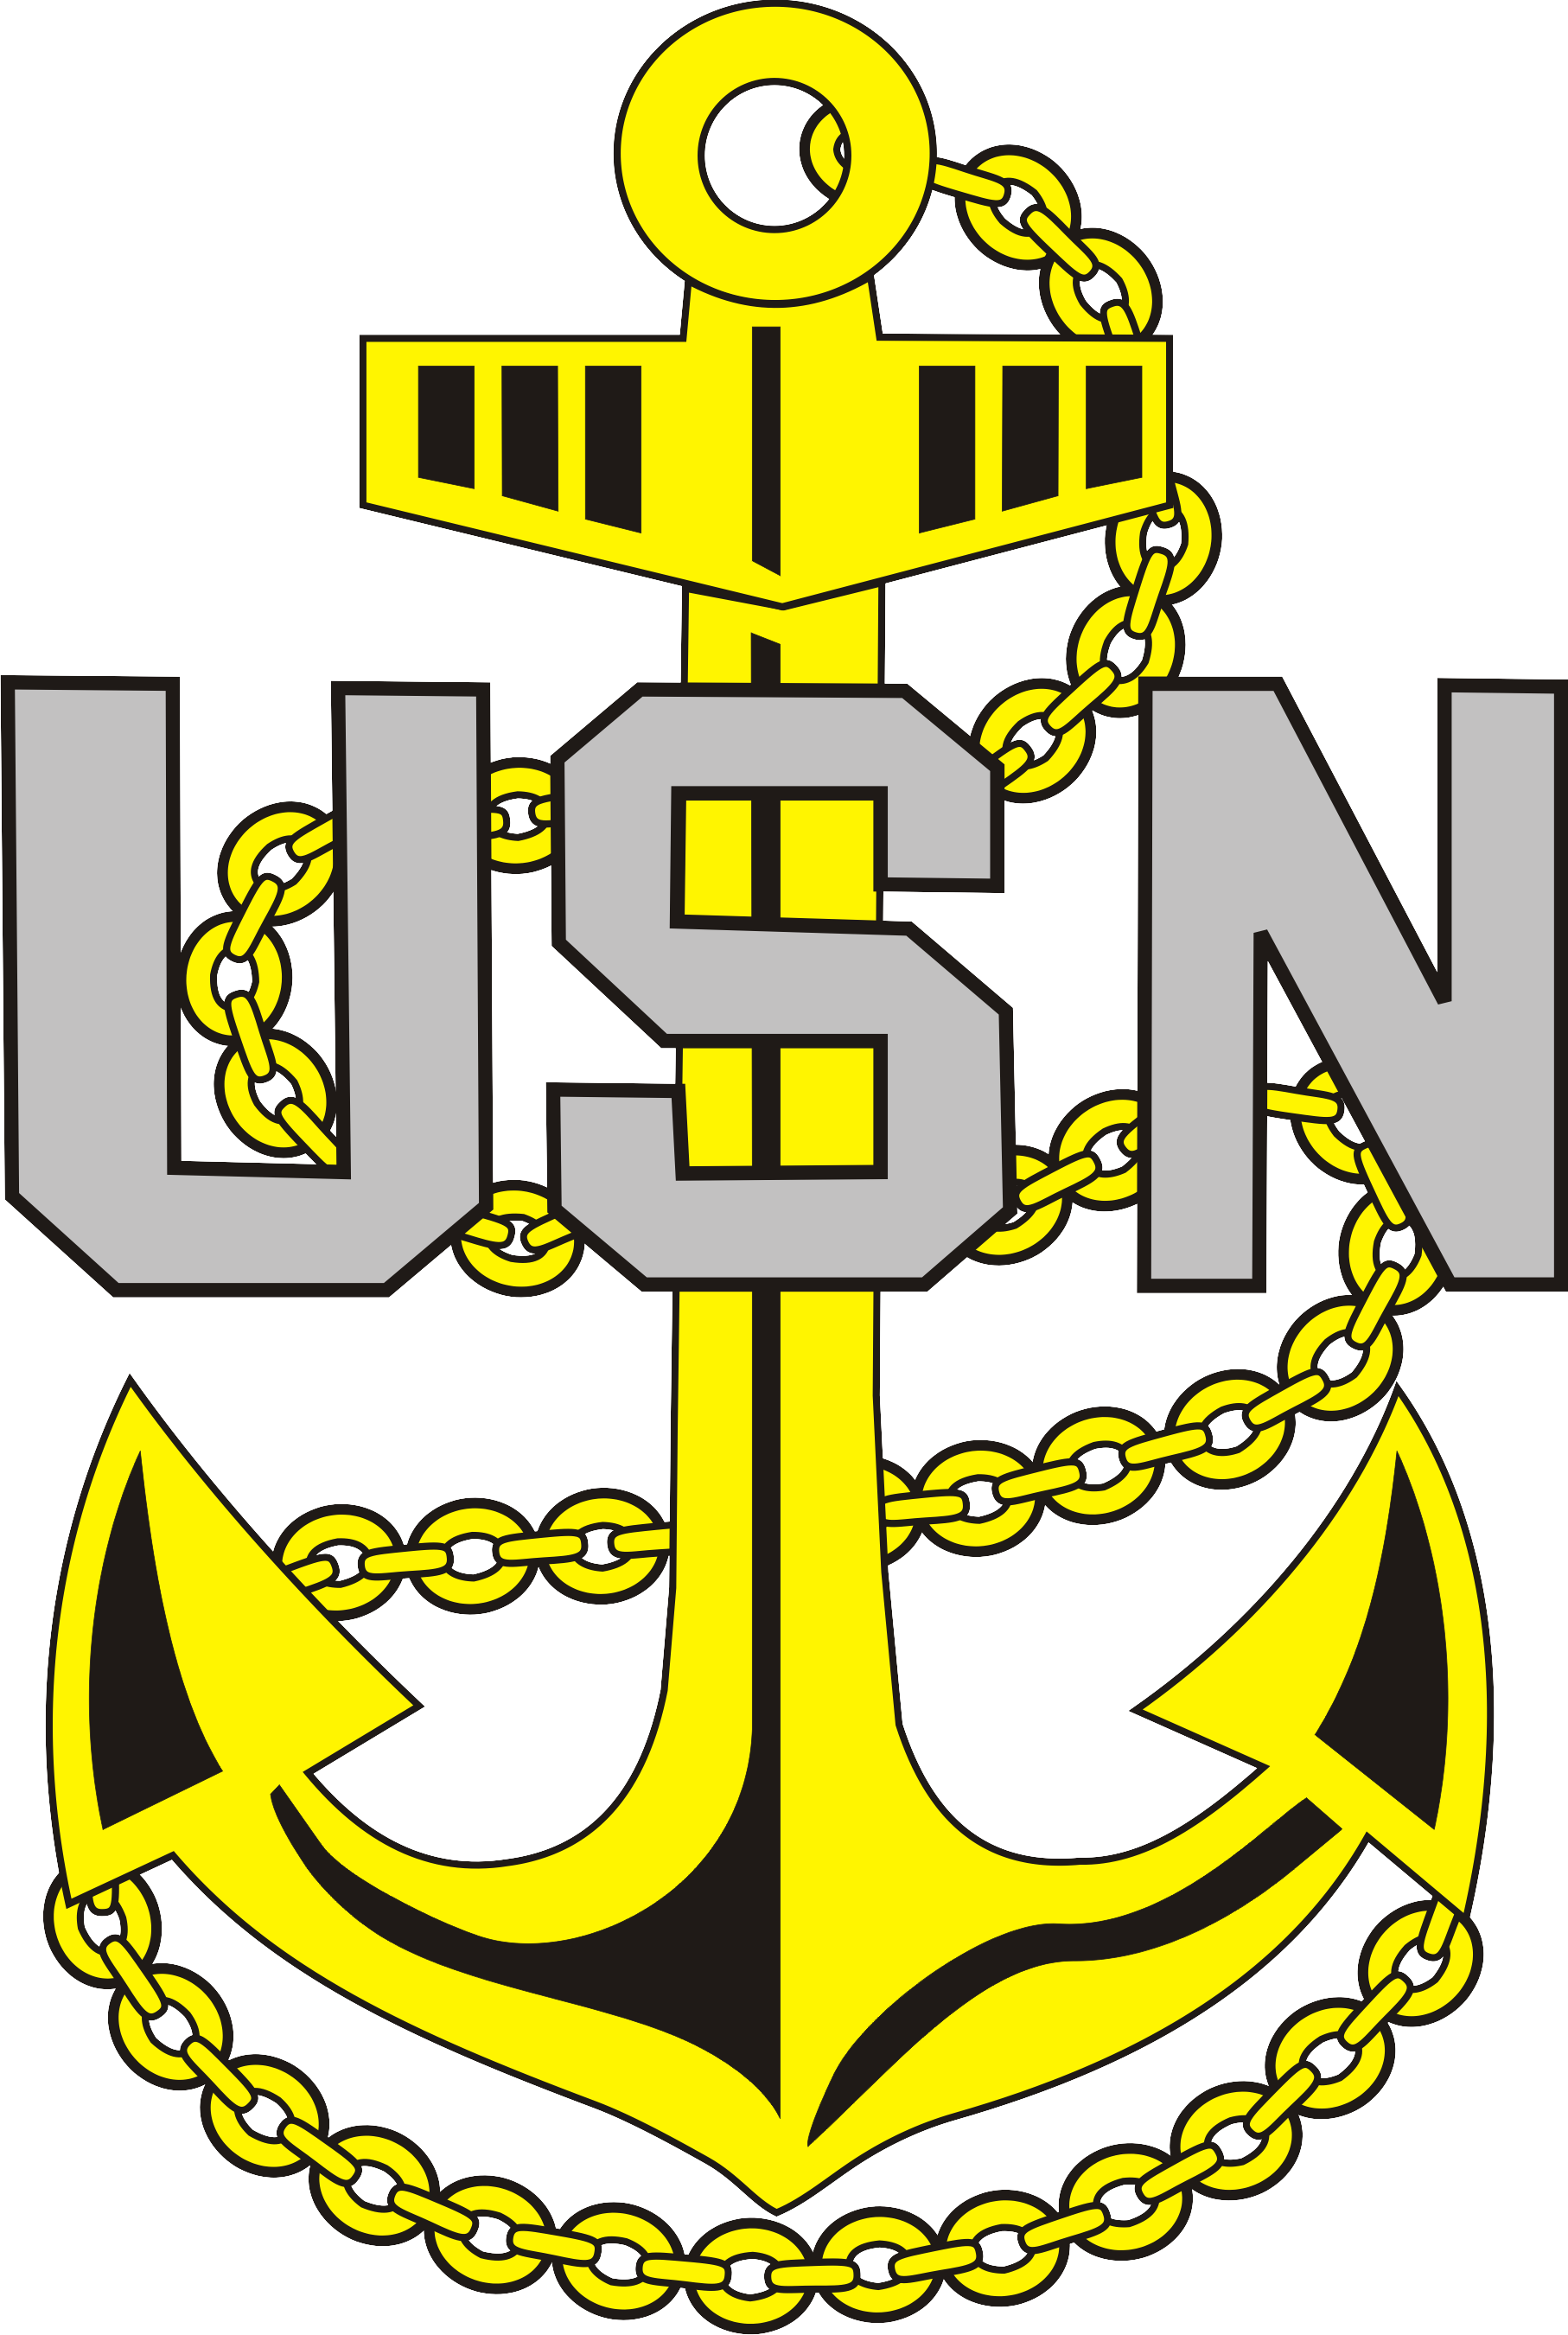 Military fabric navy logo. Nautical clipart fouled anchor